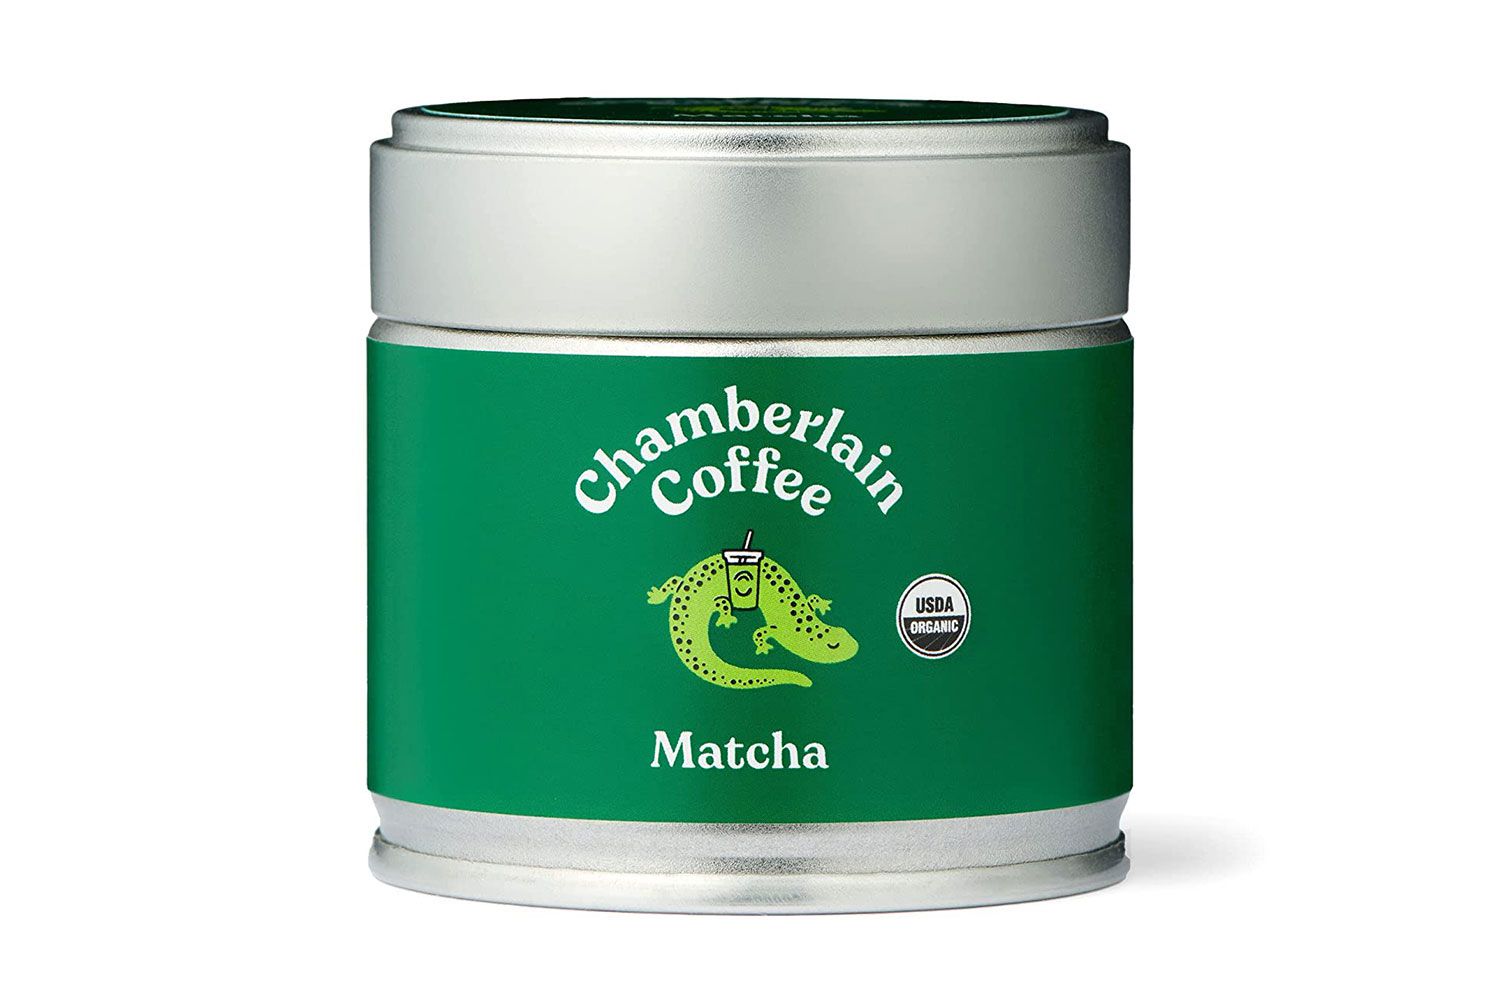 Chamberlain Coffee Matcha Green Tea Powder